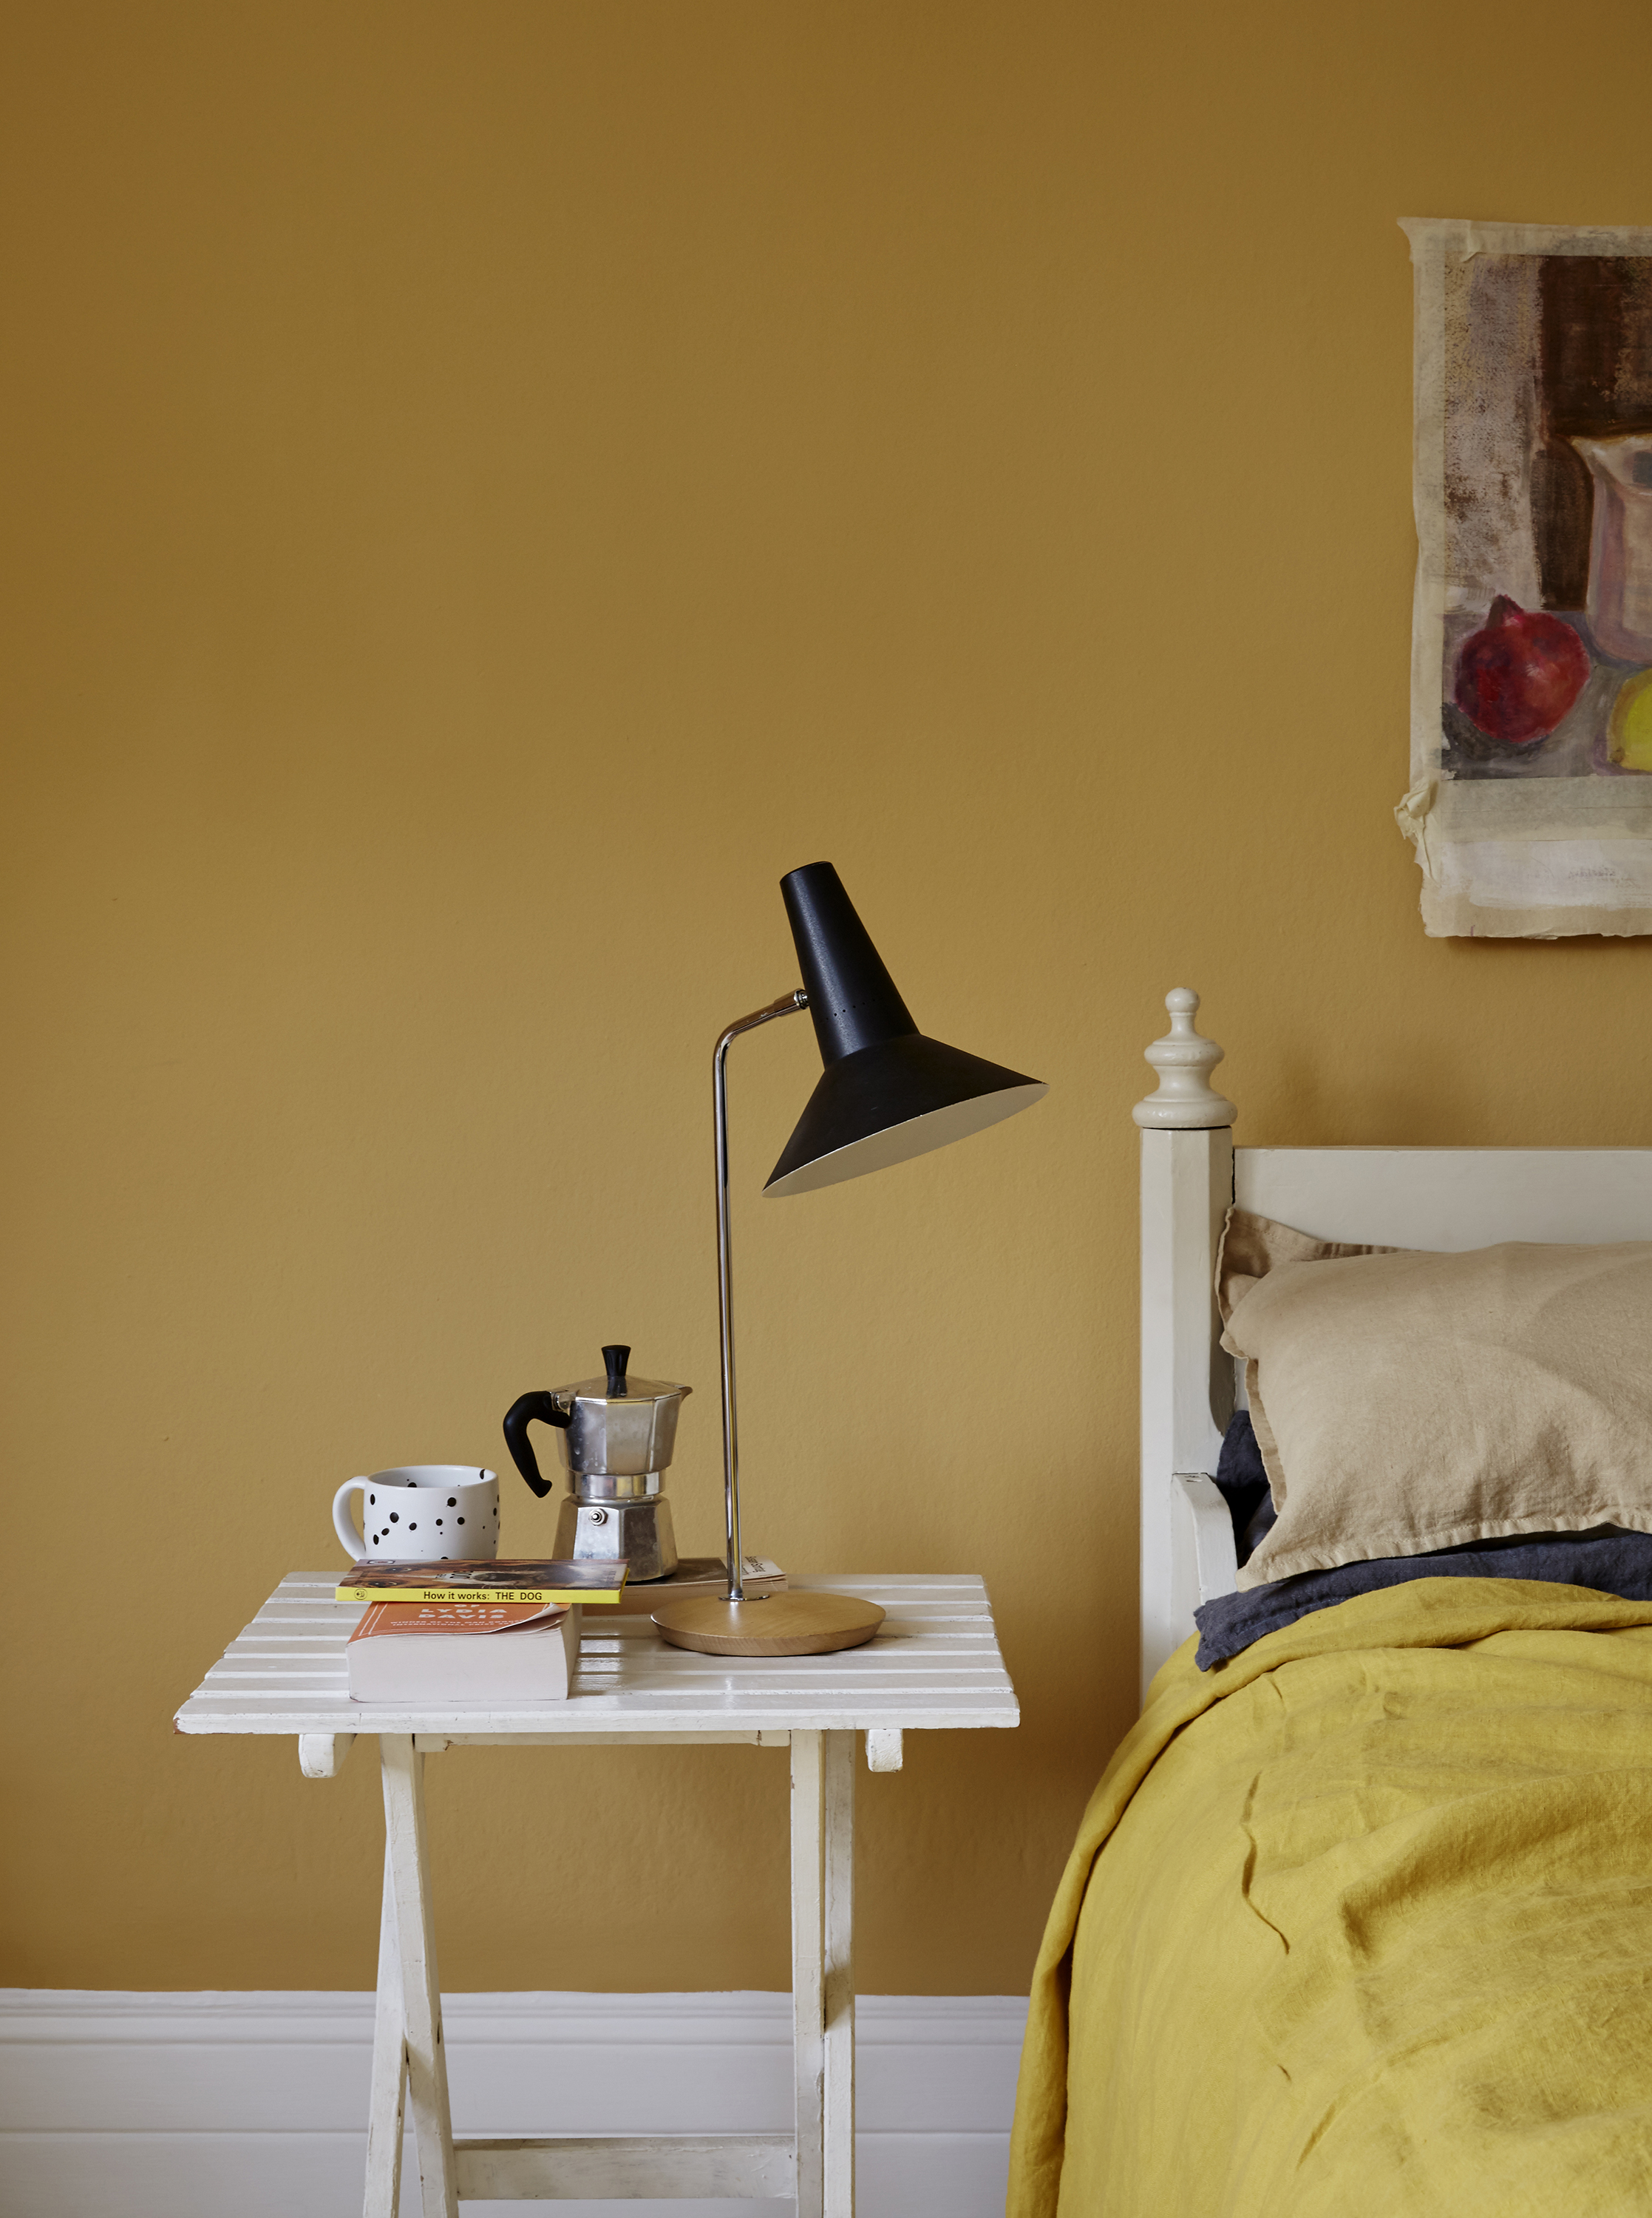 Mustard yellow paint 'Humpty Dumpty' by Earthborn on a bedroom wall